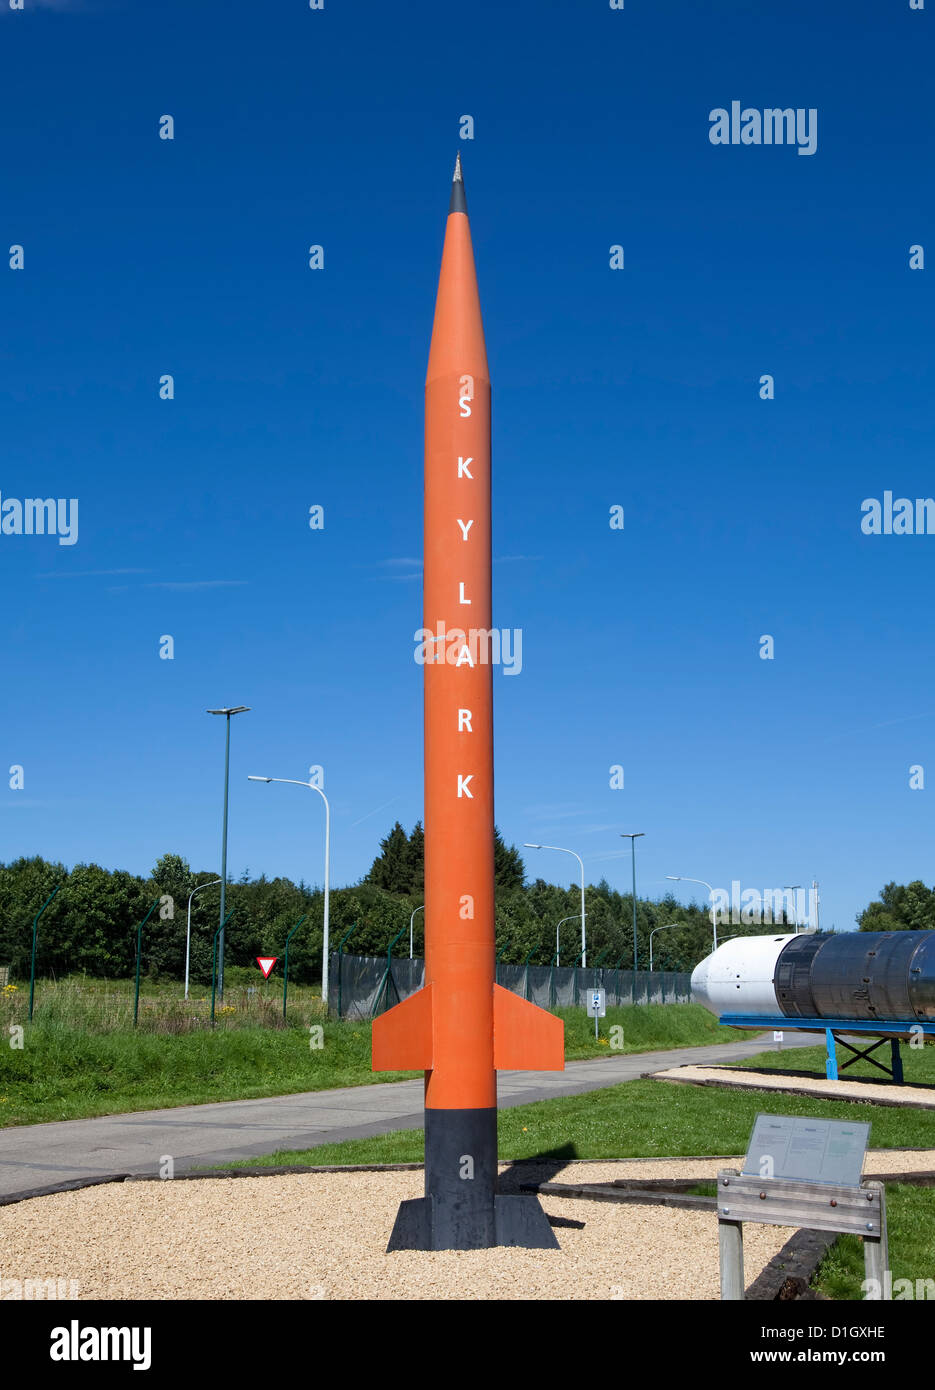 Historic British Skylark sounding rocket, 1955 - 2005, Euro Space Center, Transinne, Belgium, Europe Stock Photo